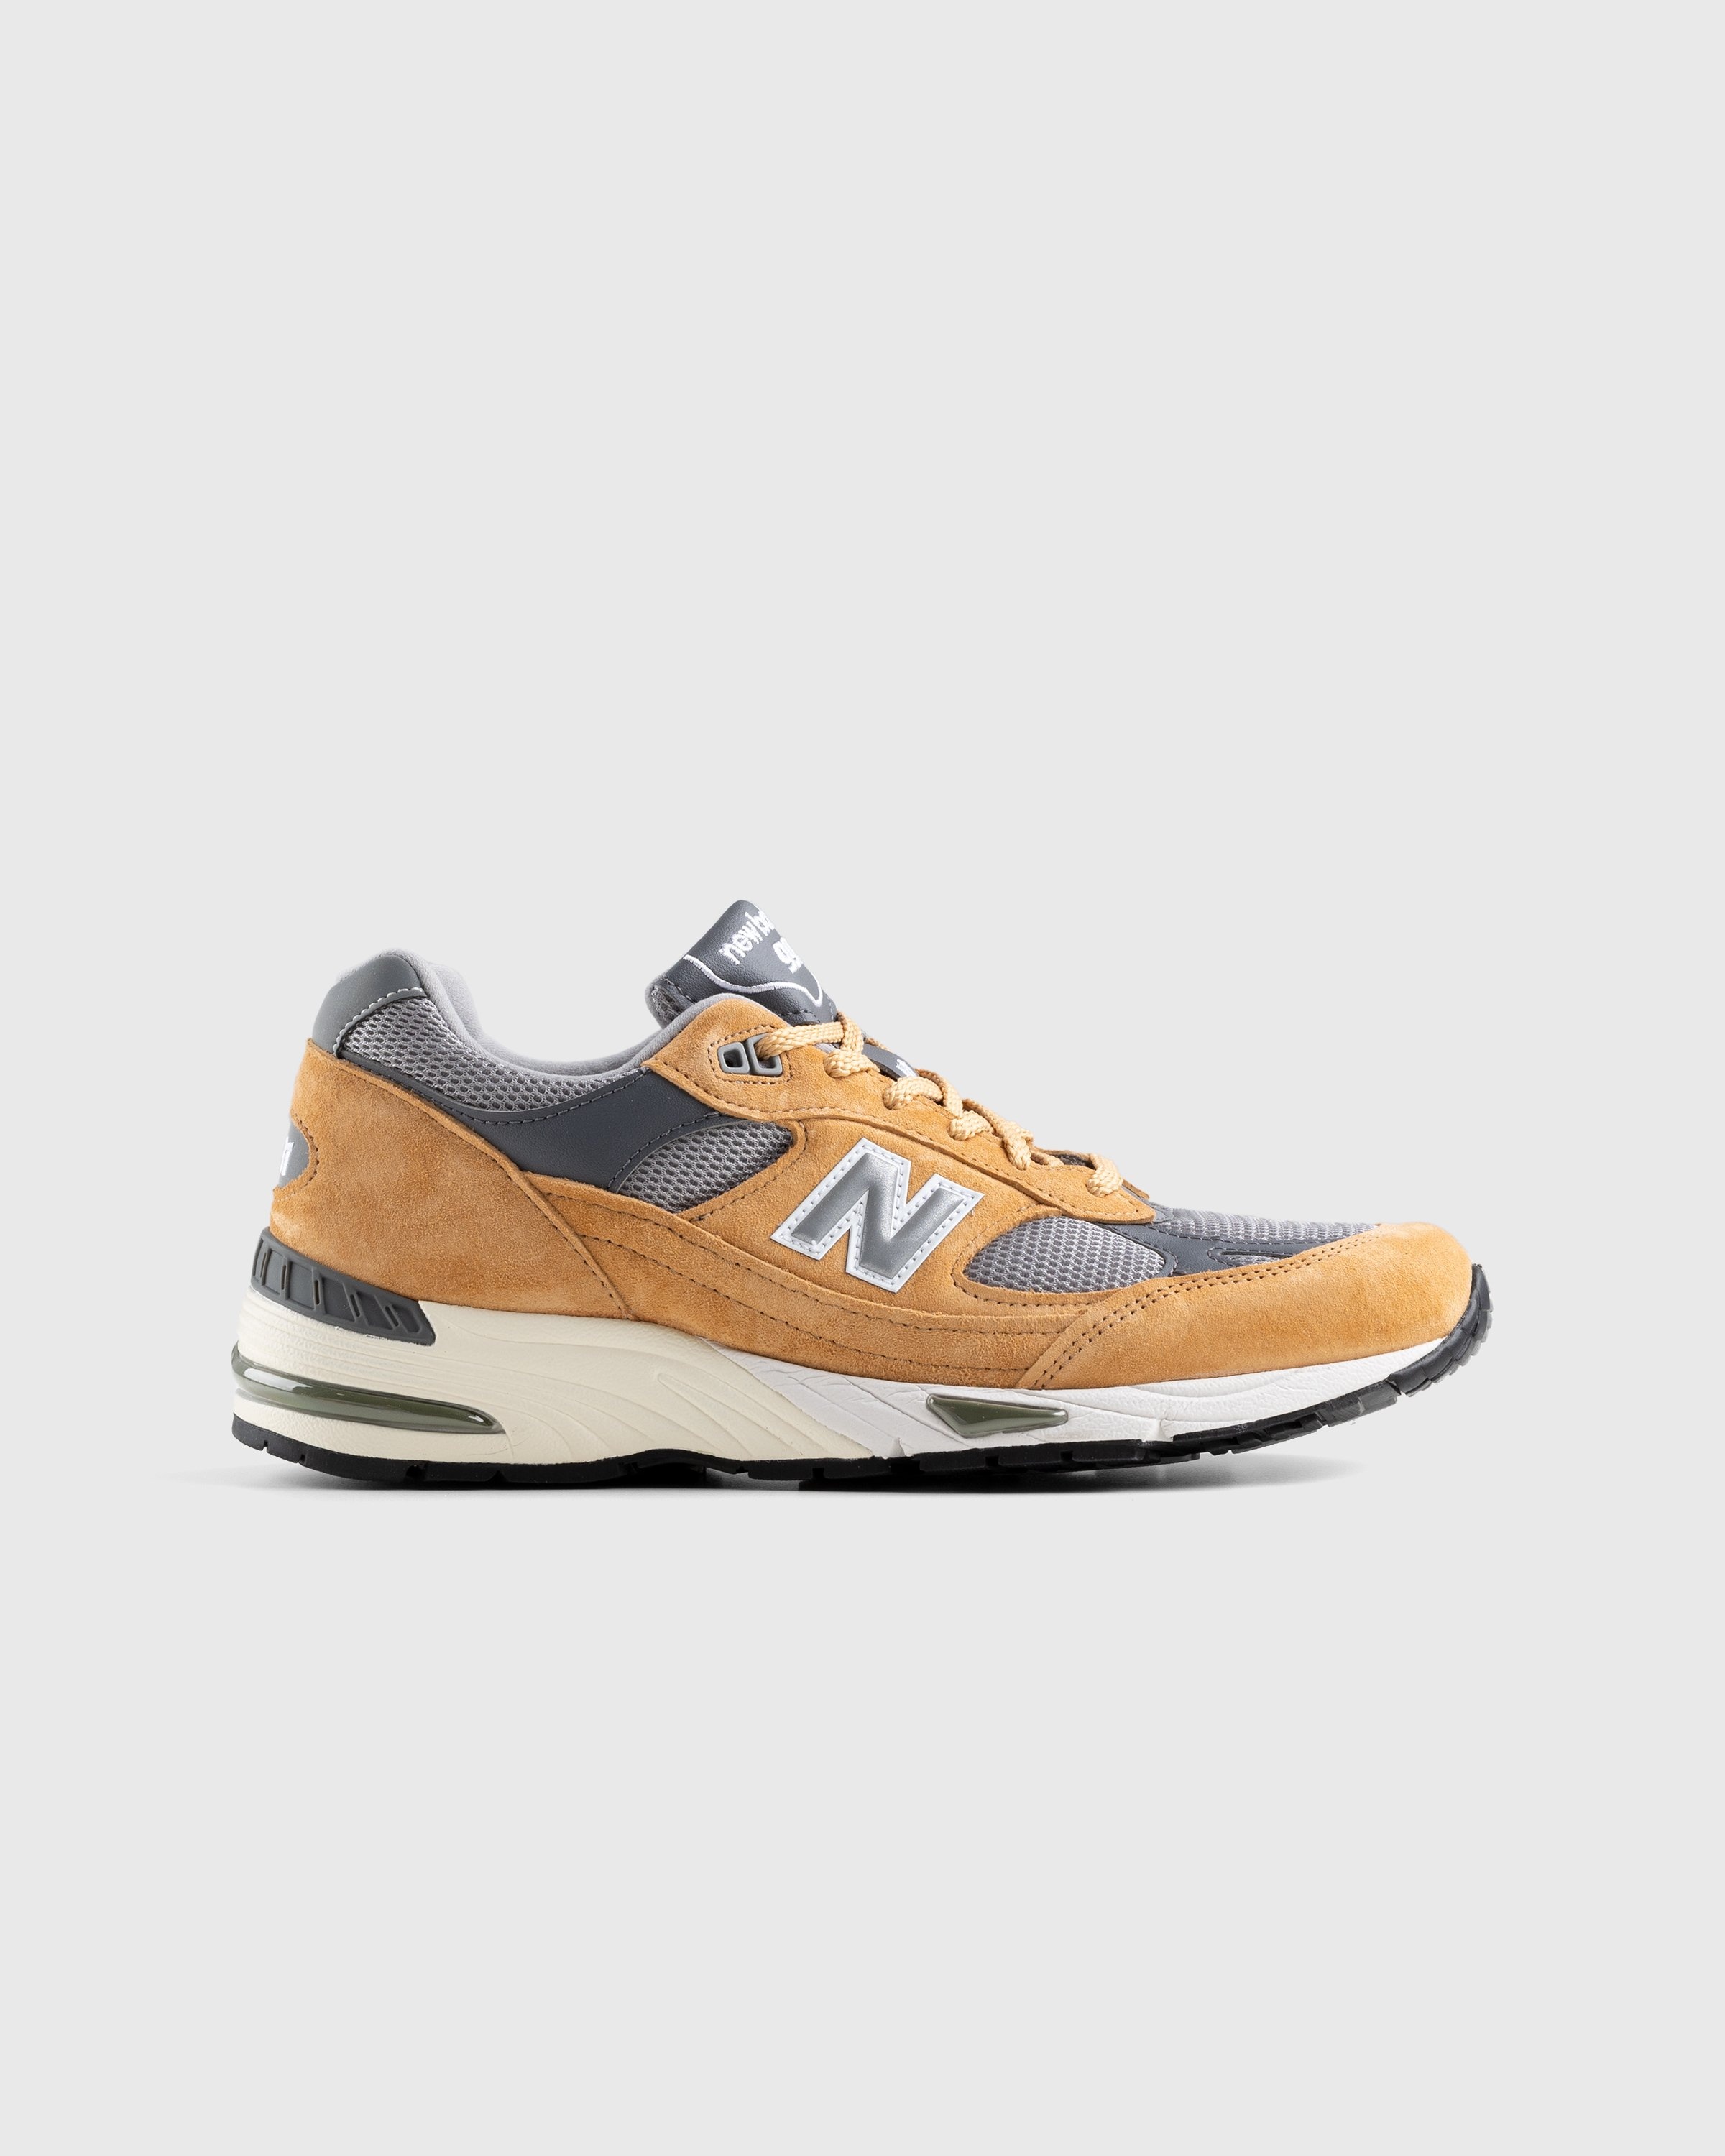 New Balance – M991TGG Tan/Grey - Low Top Sneakers - Brown - Image 1